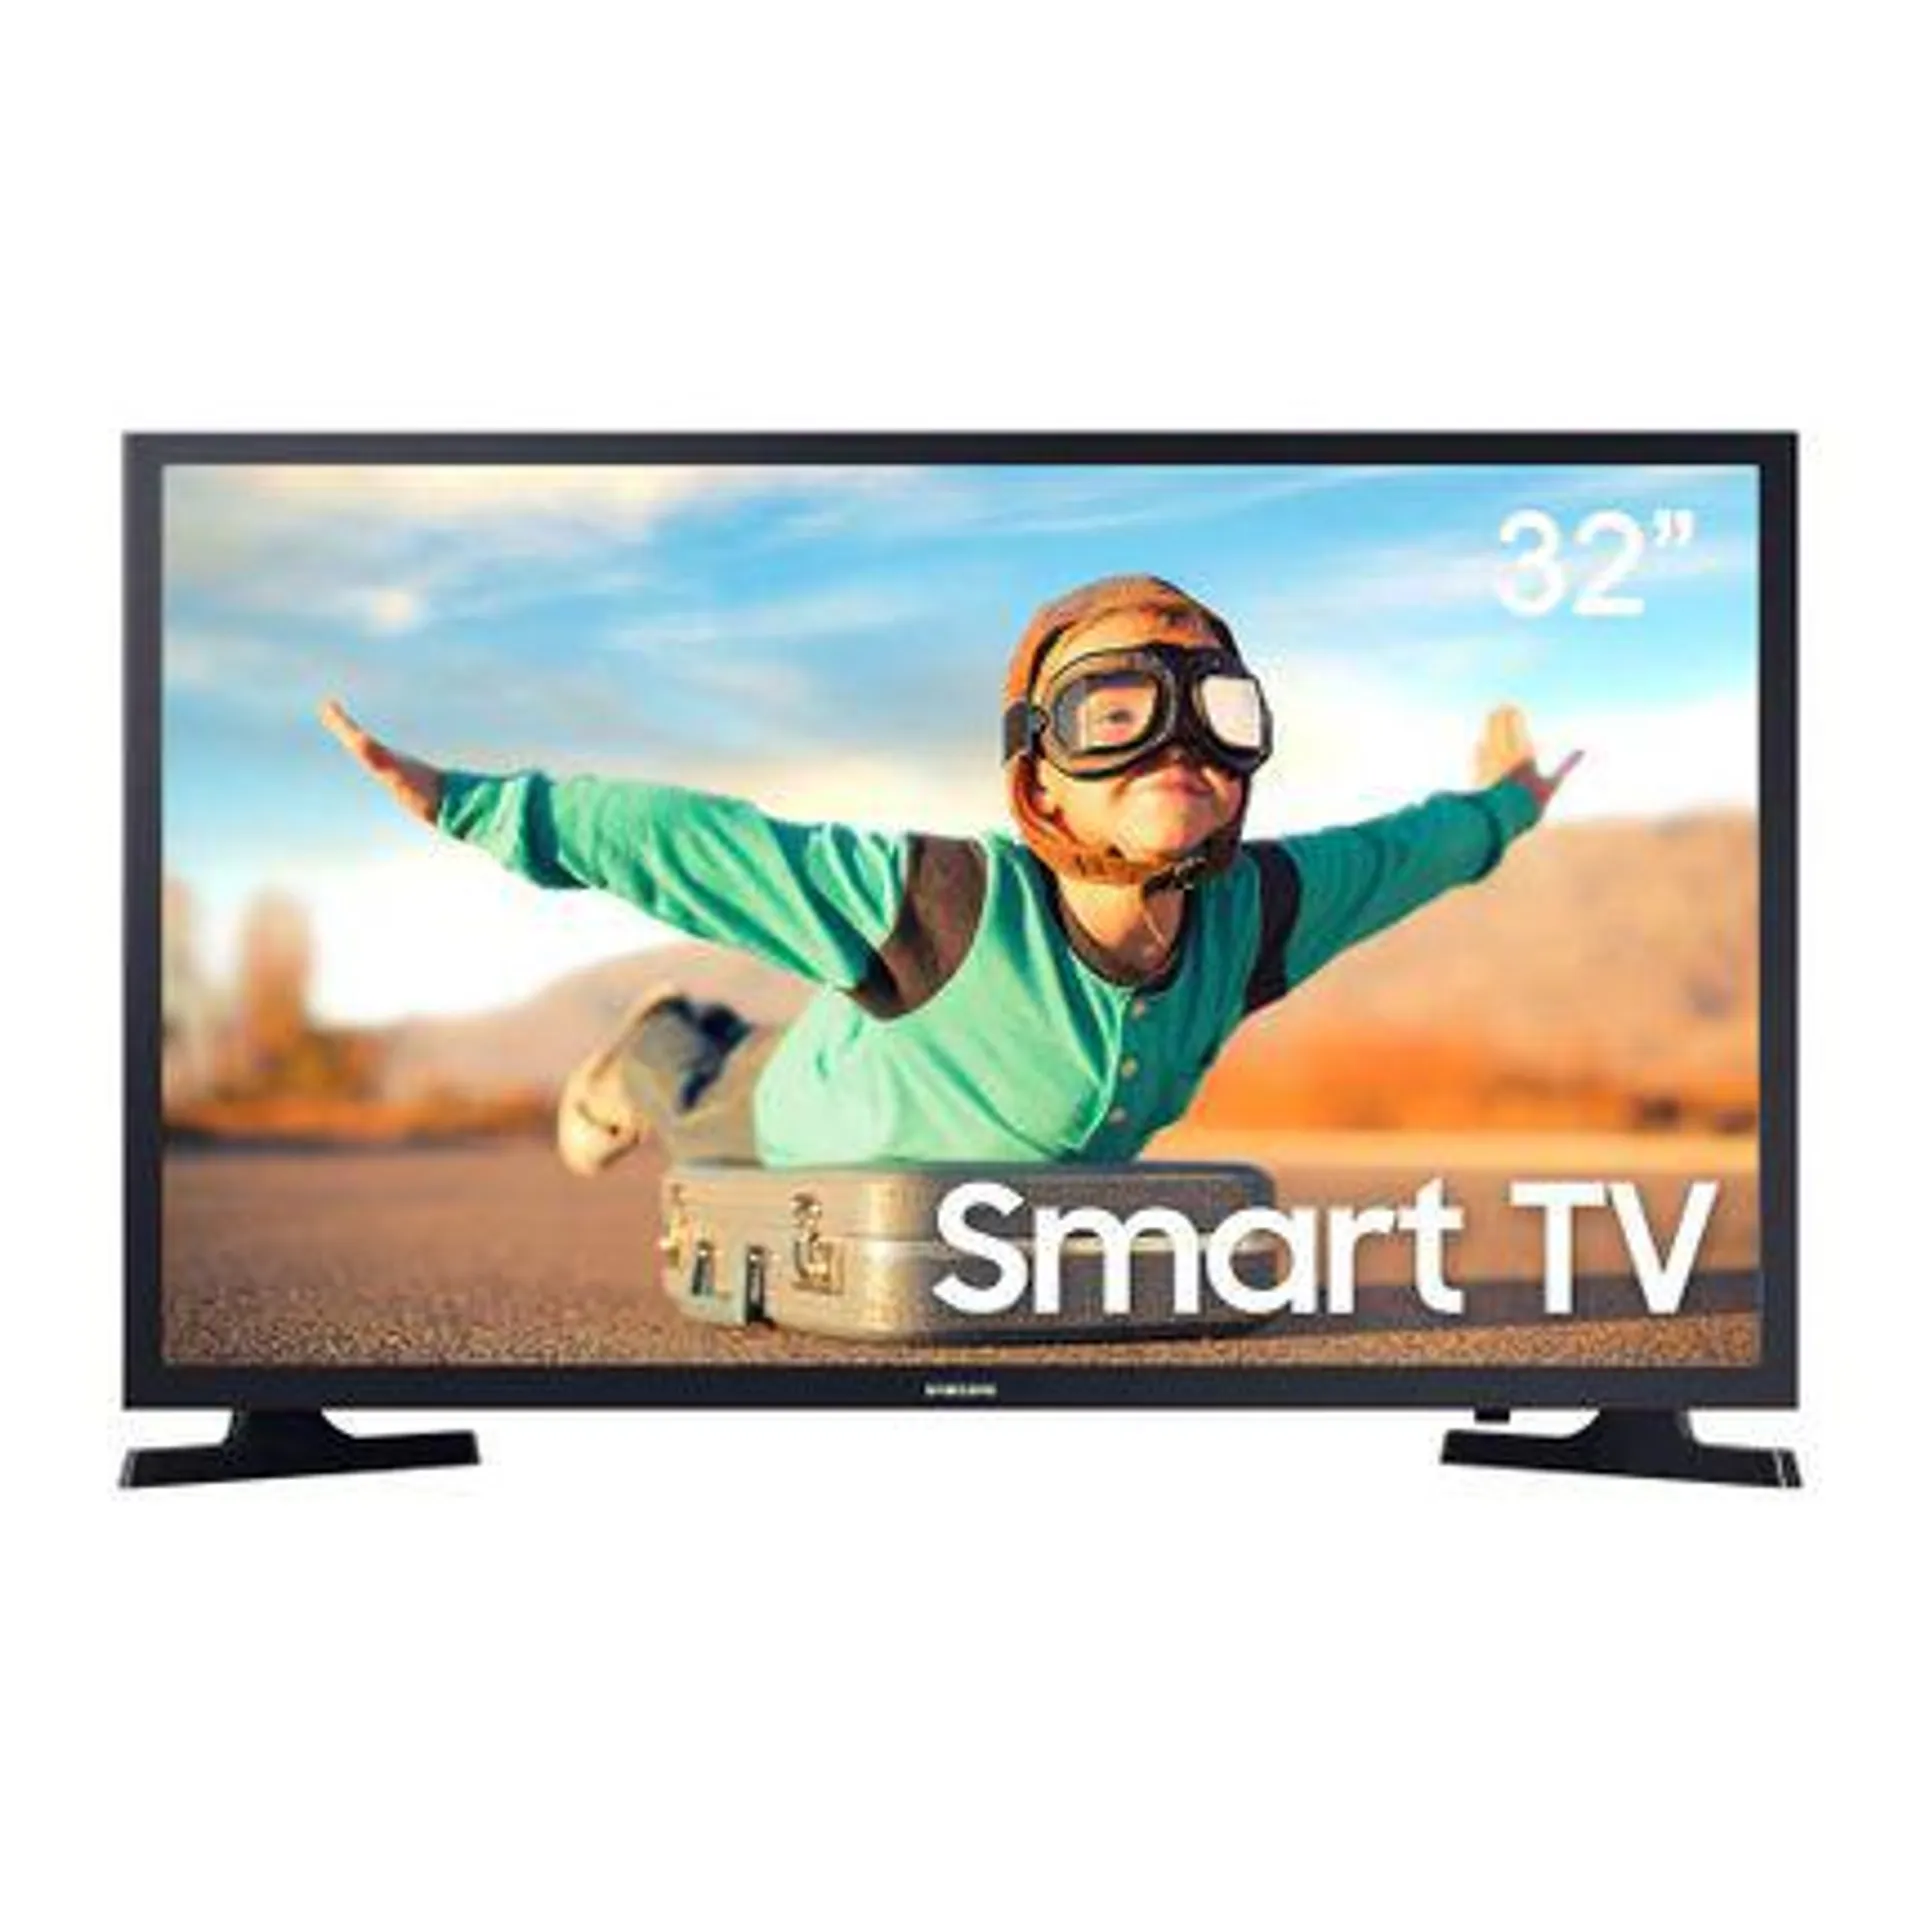 Smart TV Samsung LED 32 HD Tizen UN32T4300 2 HDMI 1 USB